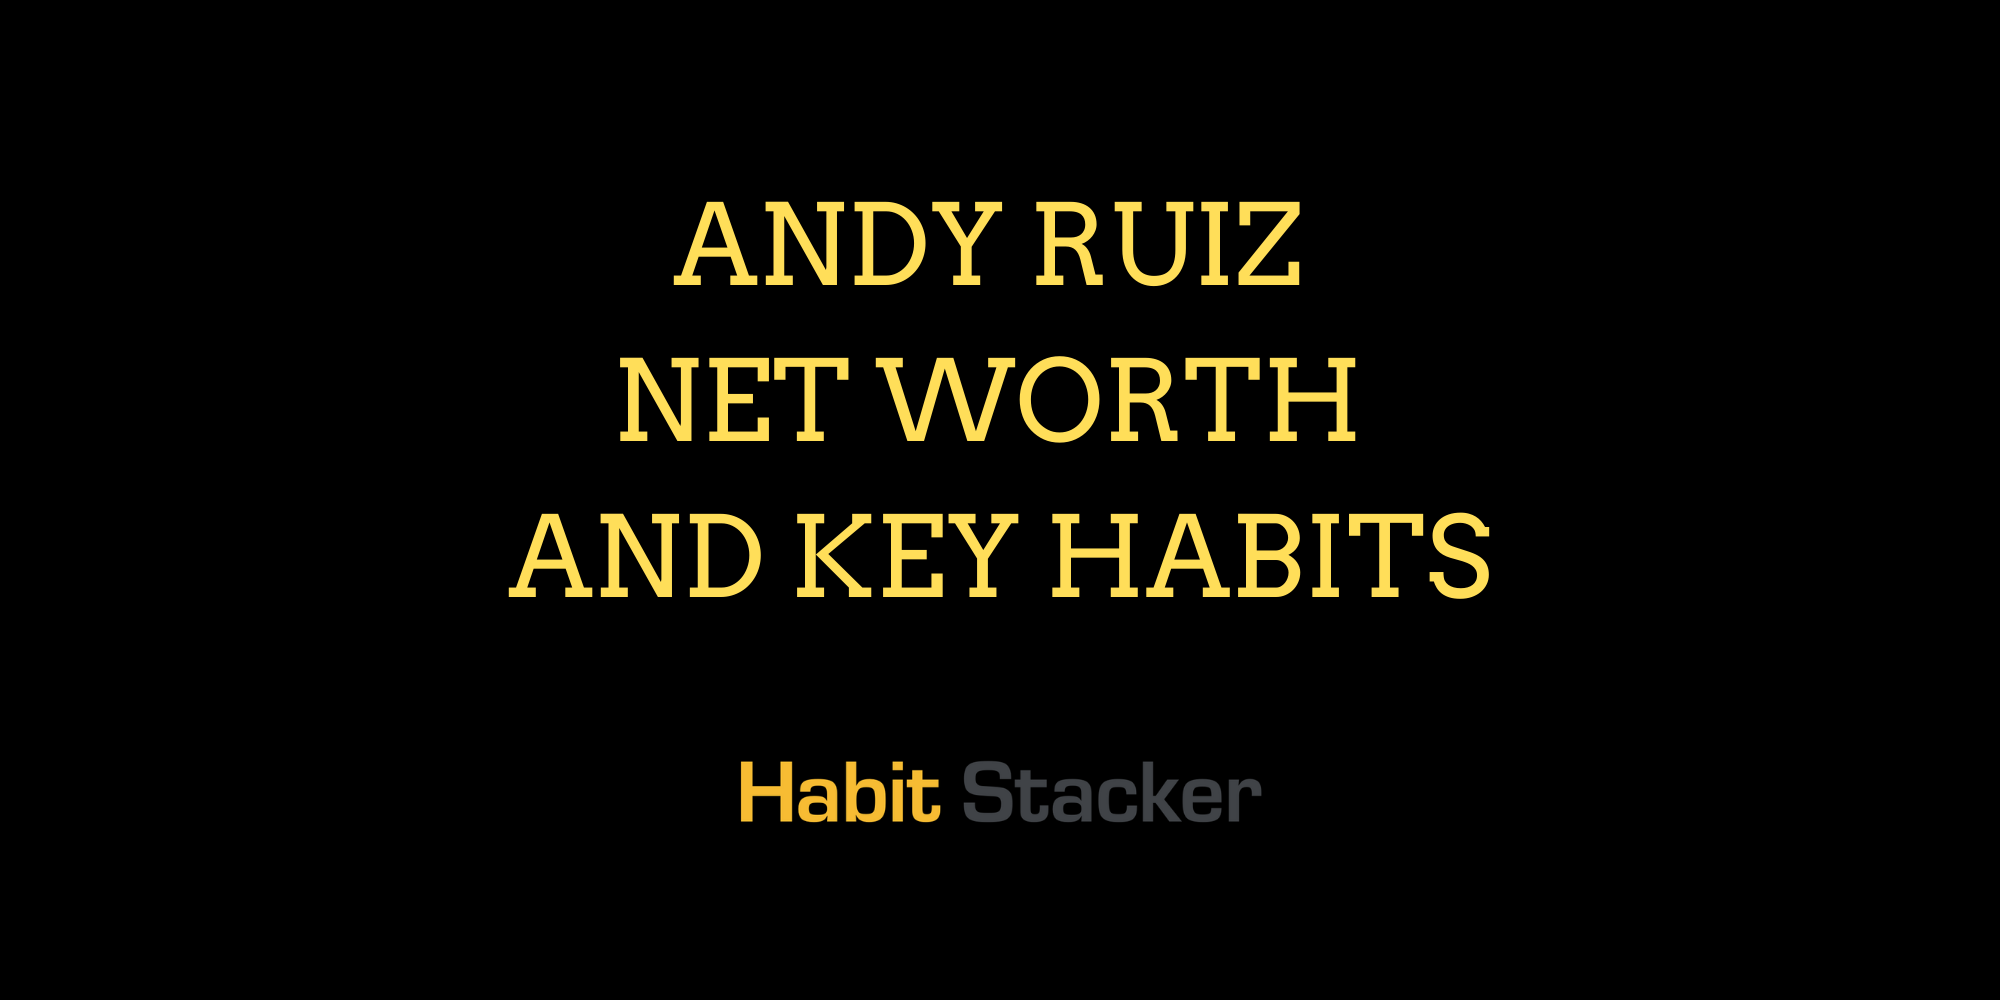 Andy Ruiz Net Worth and Key Habits